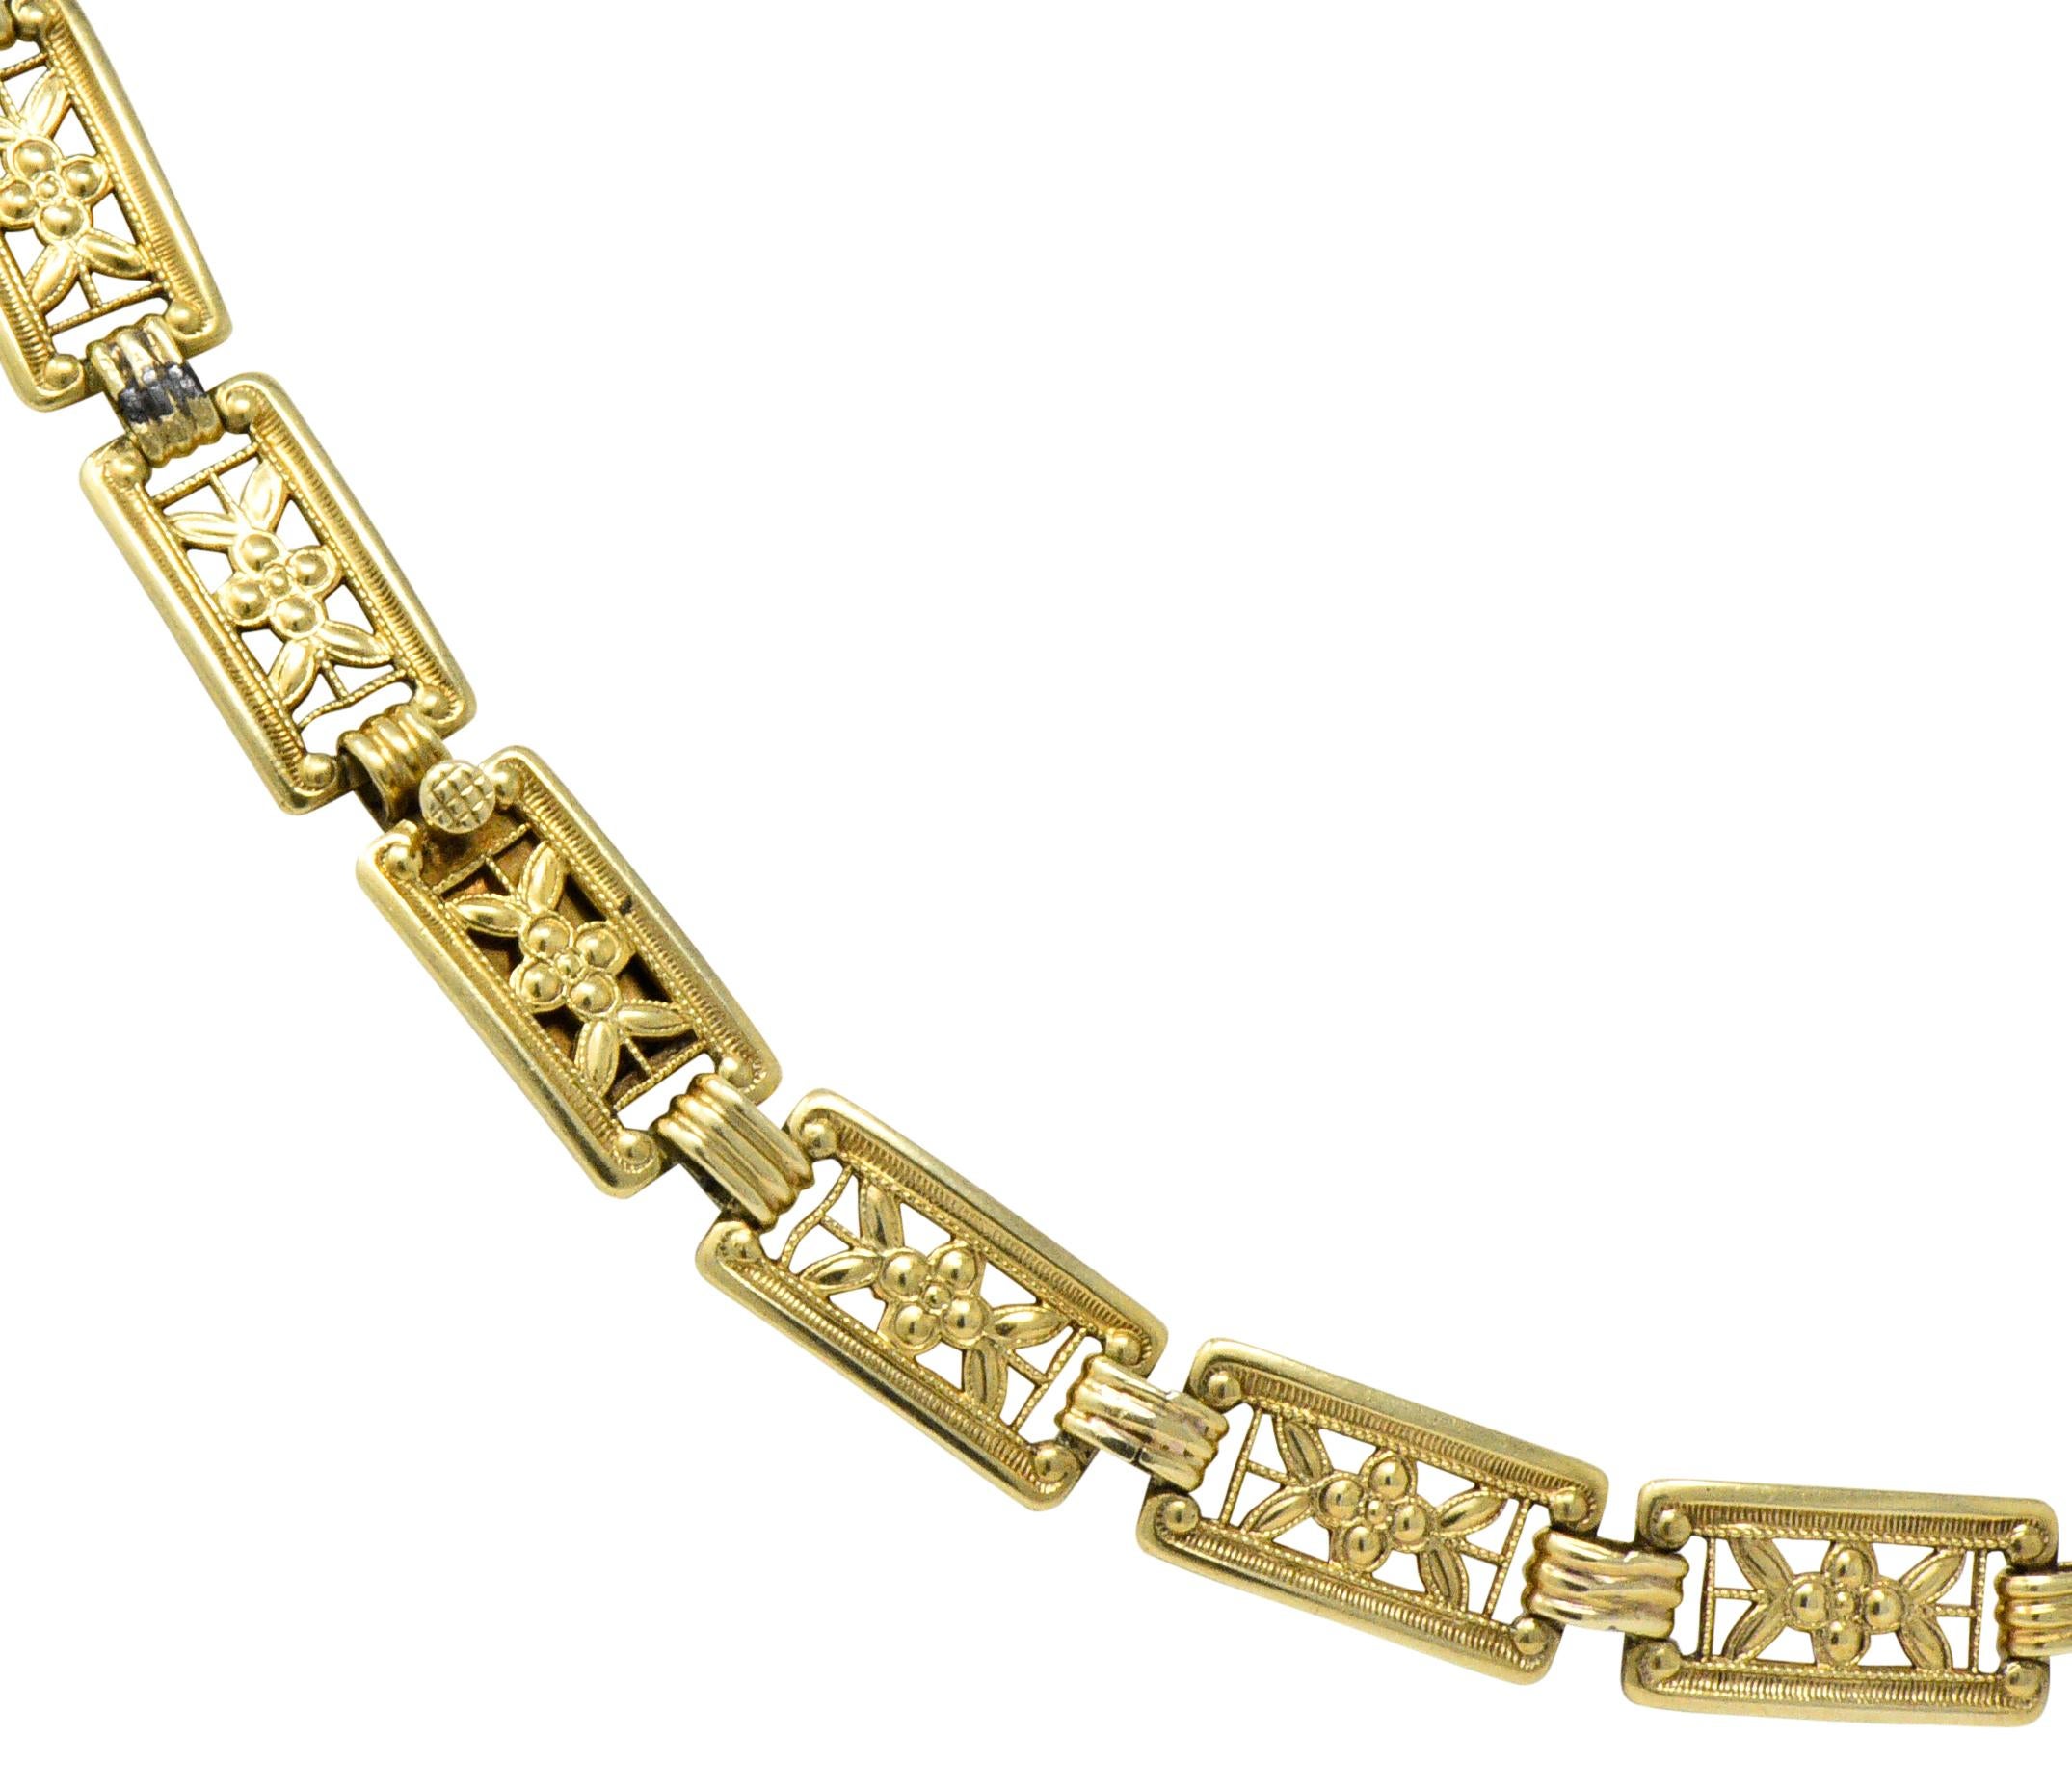 Theberath & Co. Art Nouveau Carnelian 14 Karat Gold Necklace 4